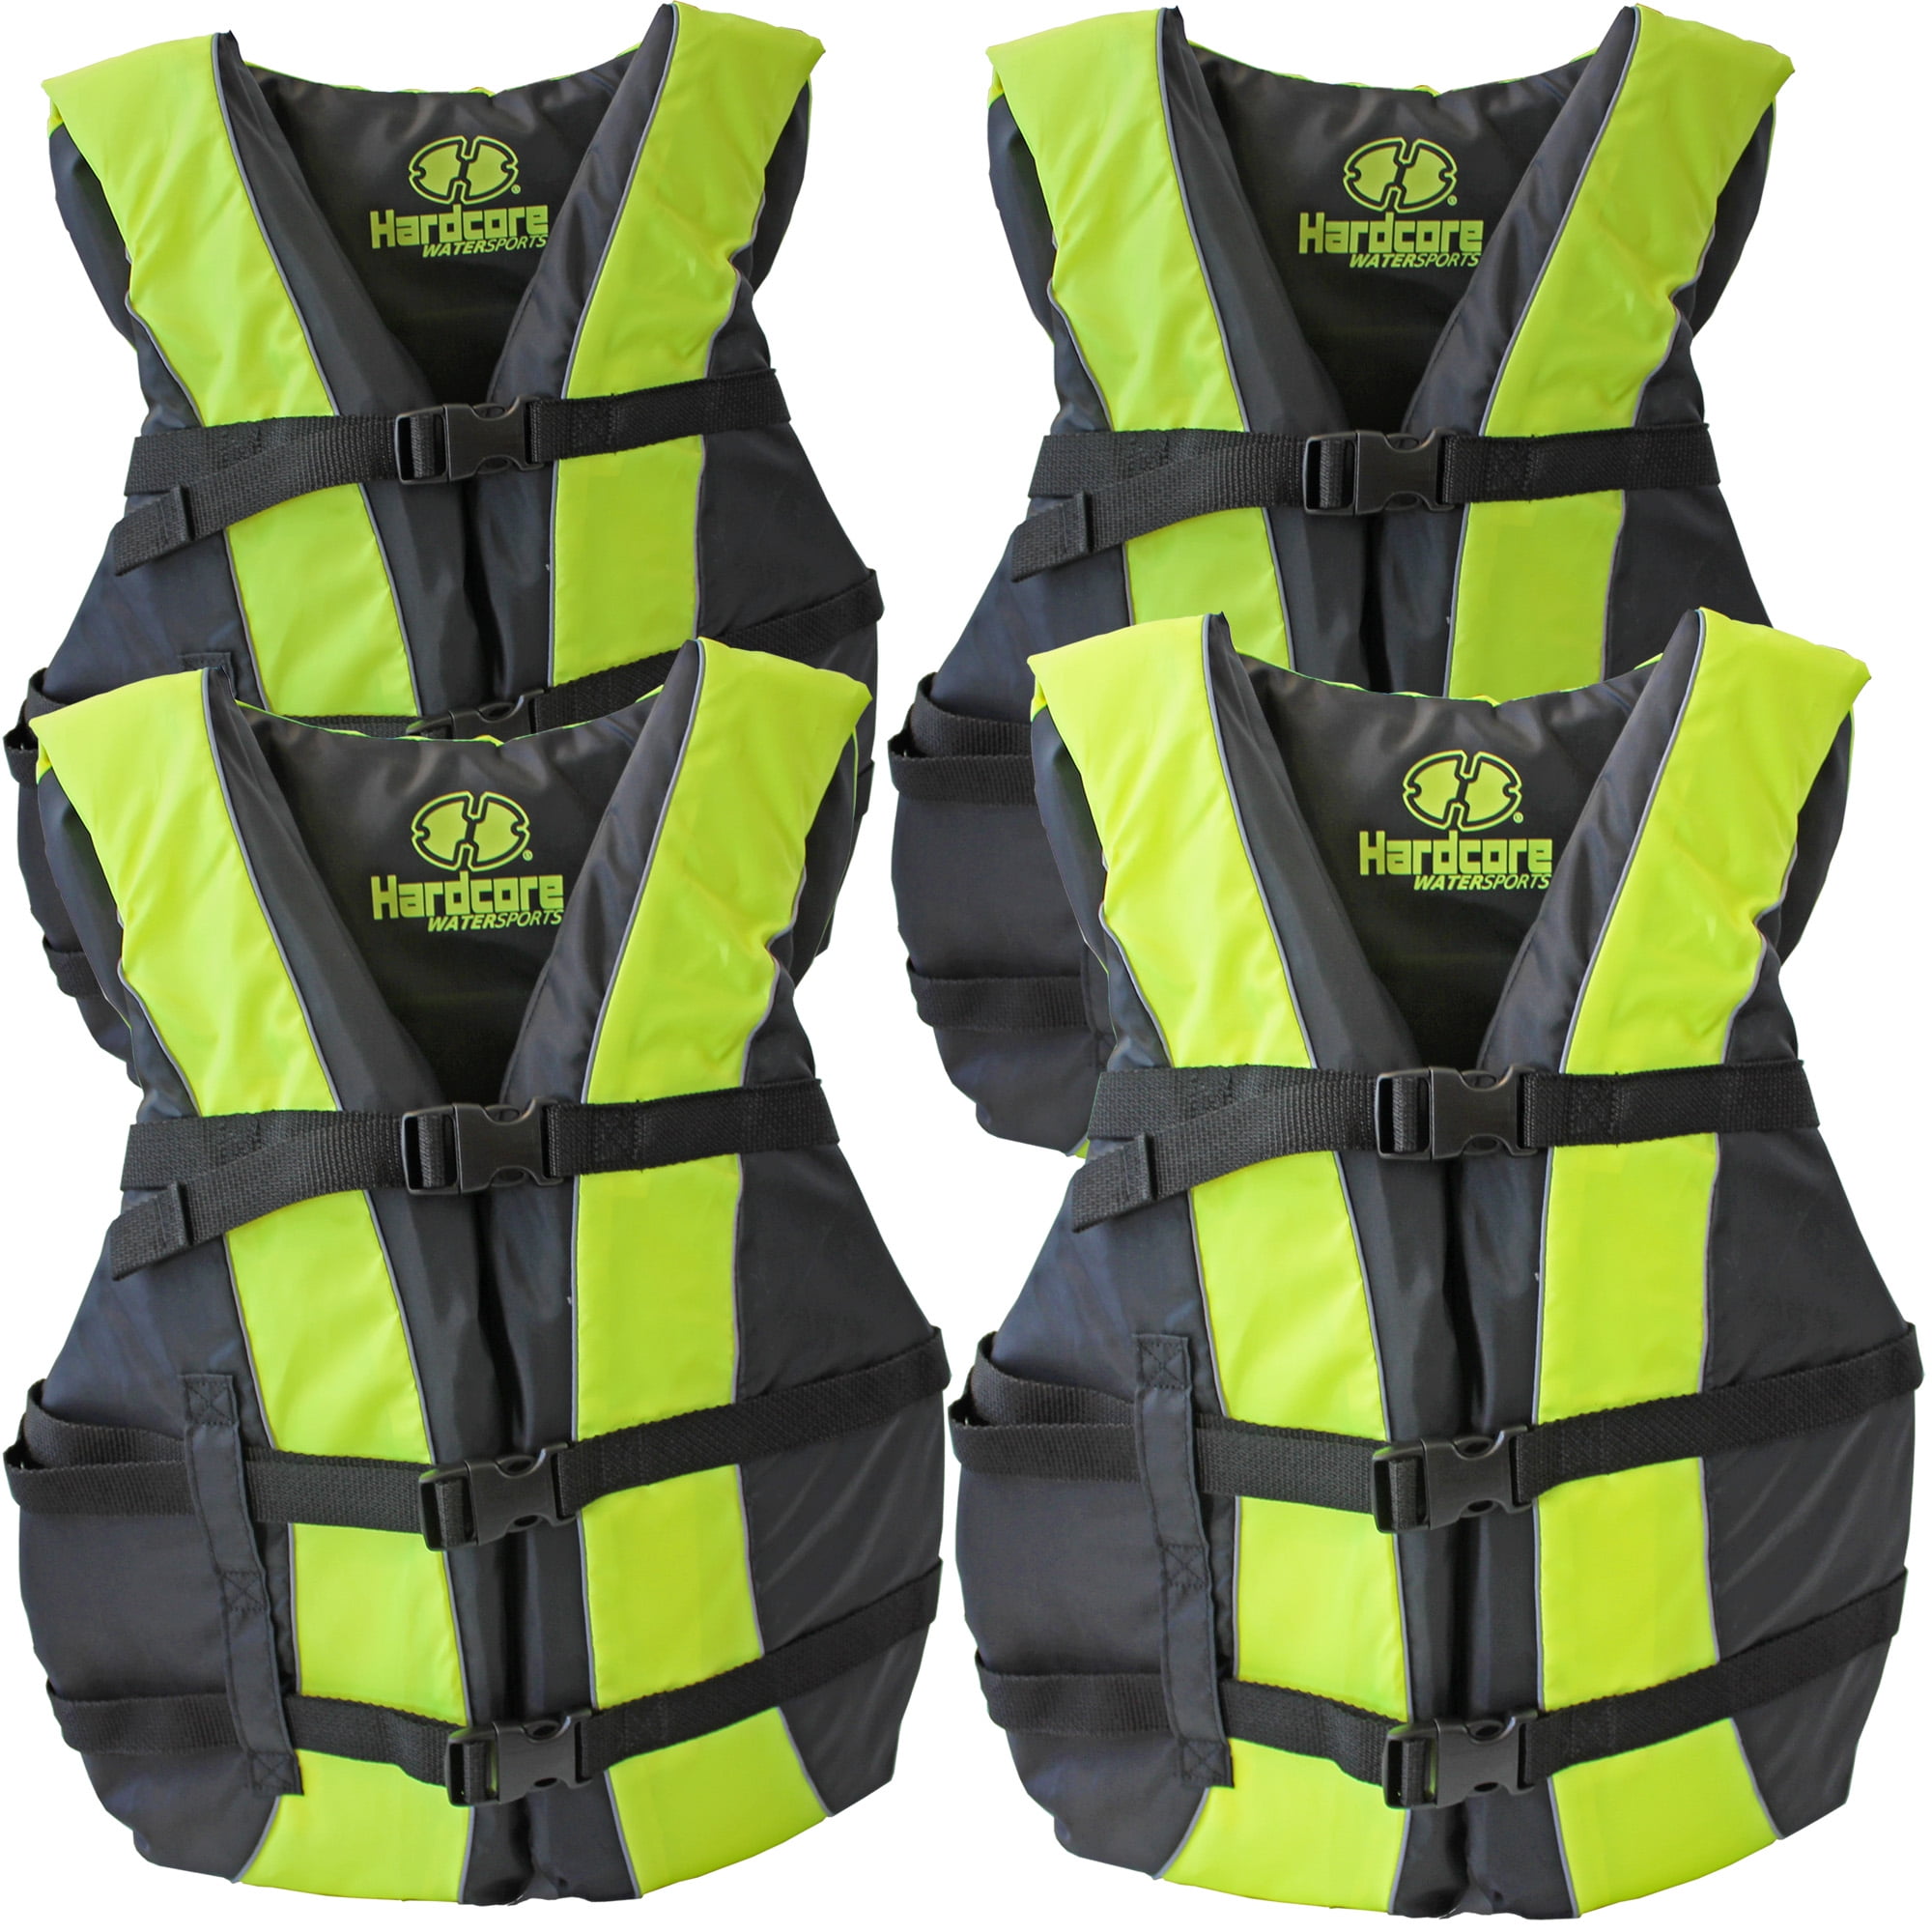 Hardcore Water Sports Hardcore life jacket 4 pack paddle vest for adults;  Coast Guard approved Type III PFD life vest flotation device; Jet ski